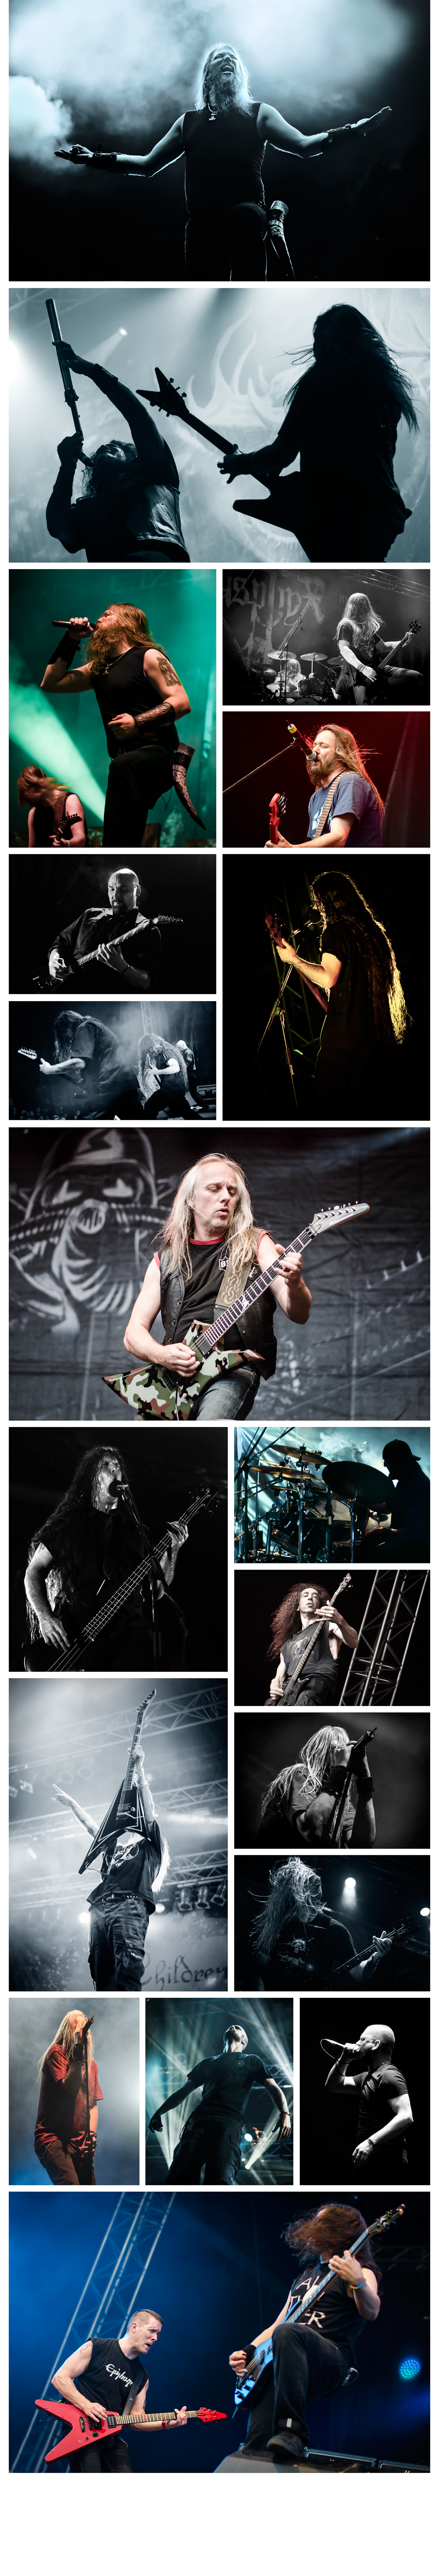 concert concertphotography Photography  LivePhotography metalmusic Metaldays festival nikonD7000